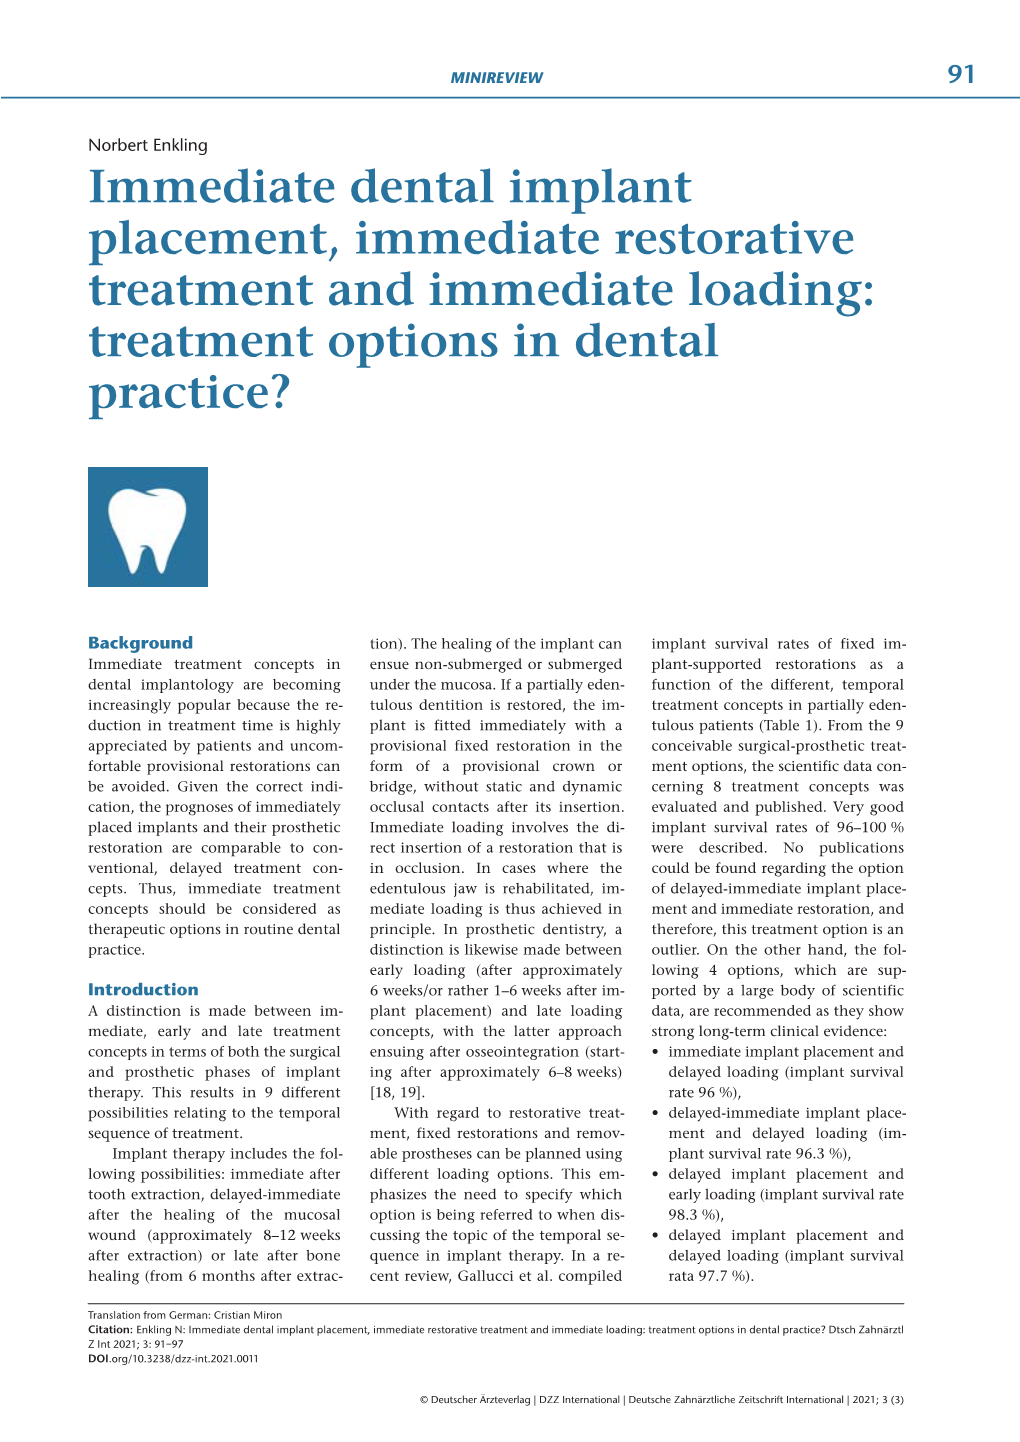 Immediate Dental Implant Placement, Immediate Restorative Treatment and Immediate Loading: Treatment Options in Dental Practice?